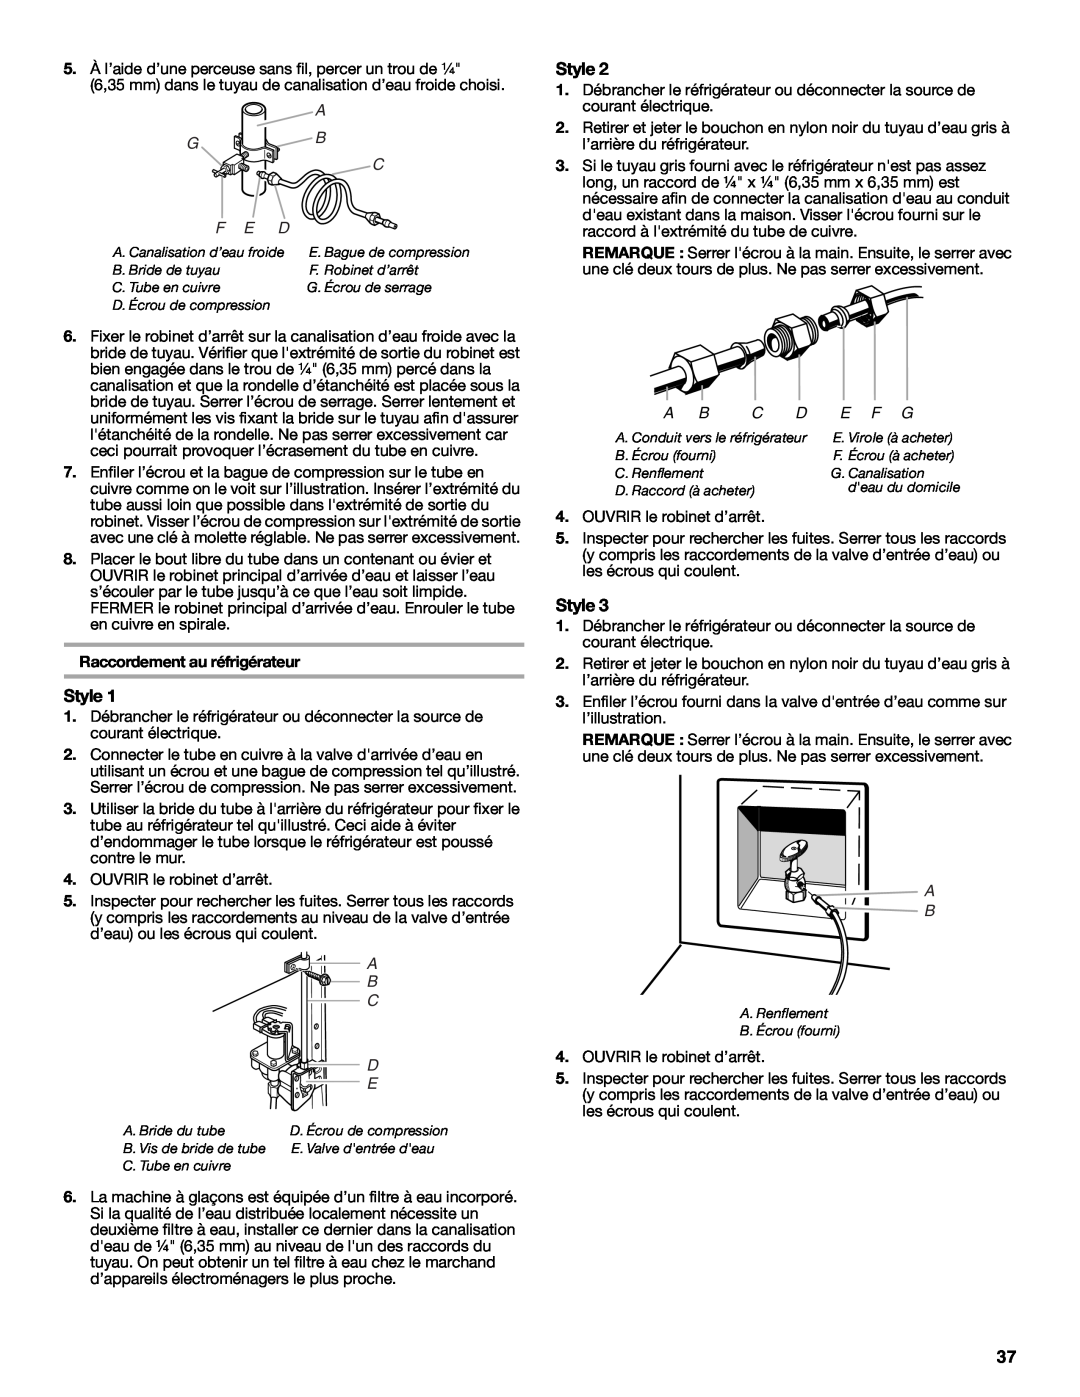 Amana W10237701A, W10237708A installation instructions A G B C F E D, Raccordement au réfrigérateur, E F G 